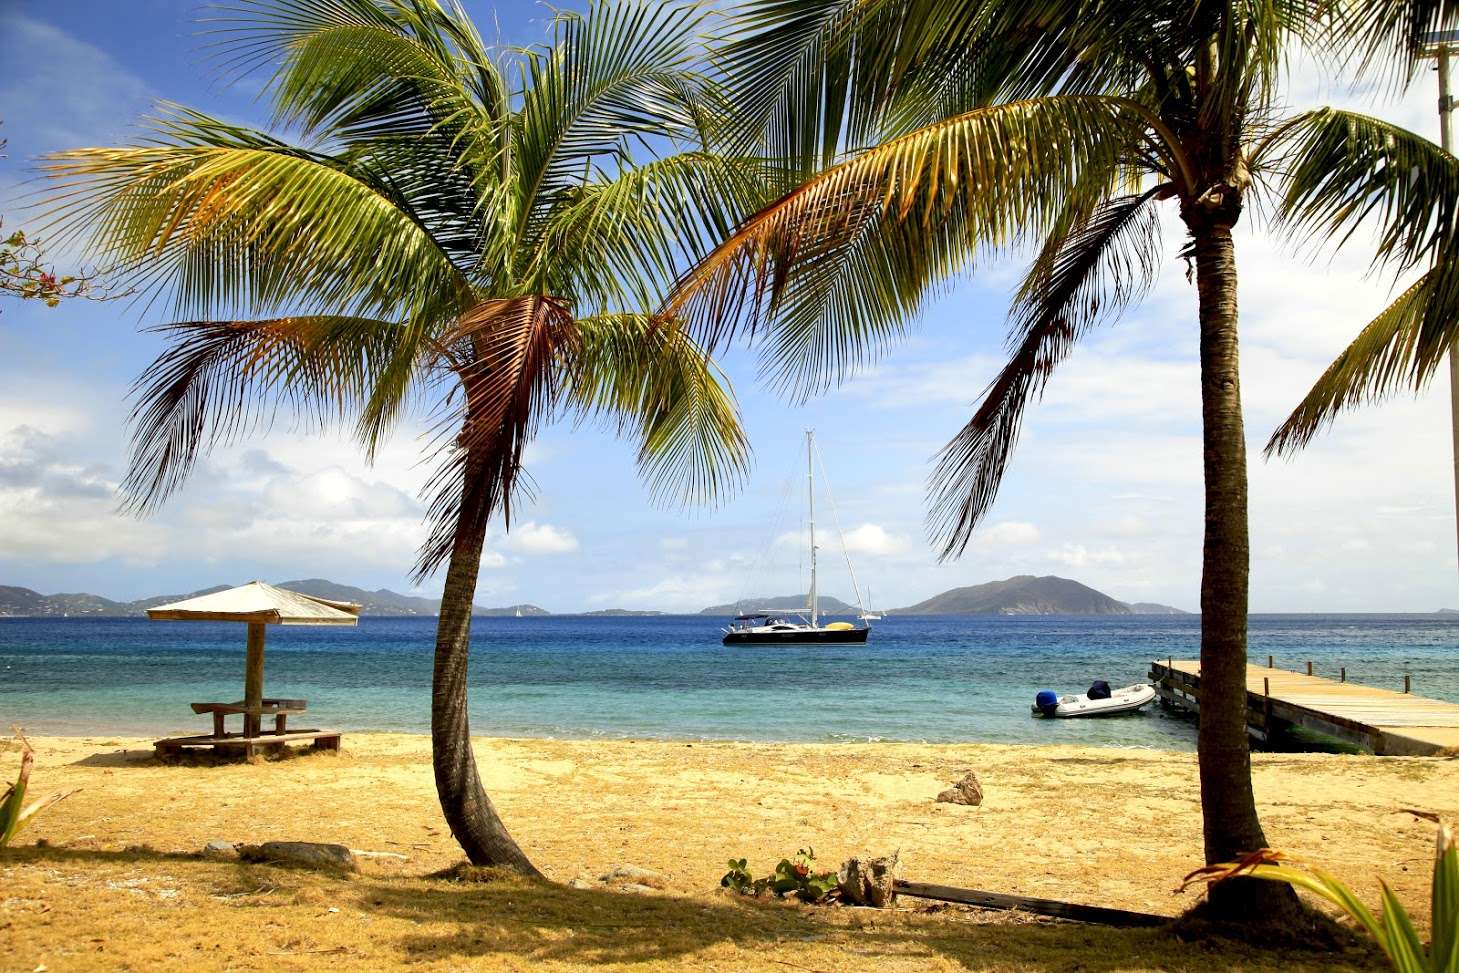 SAYANG Yacht Charter - Tropical SAYANG, just off the beach